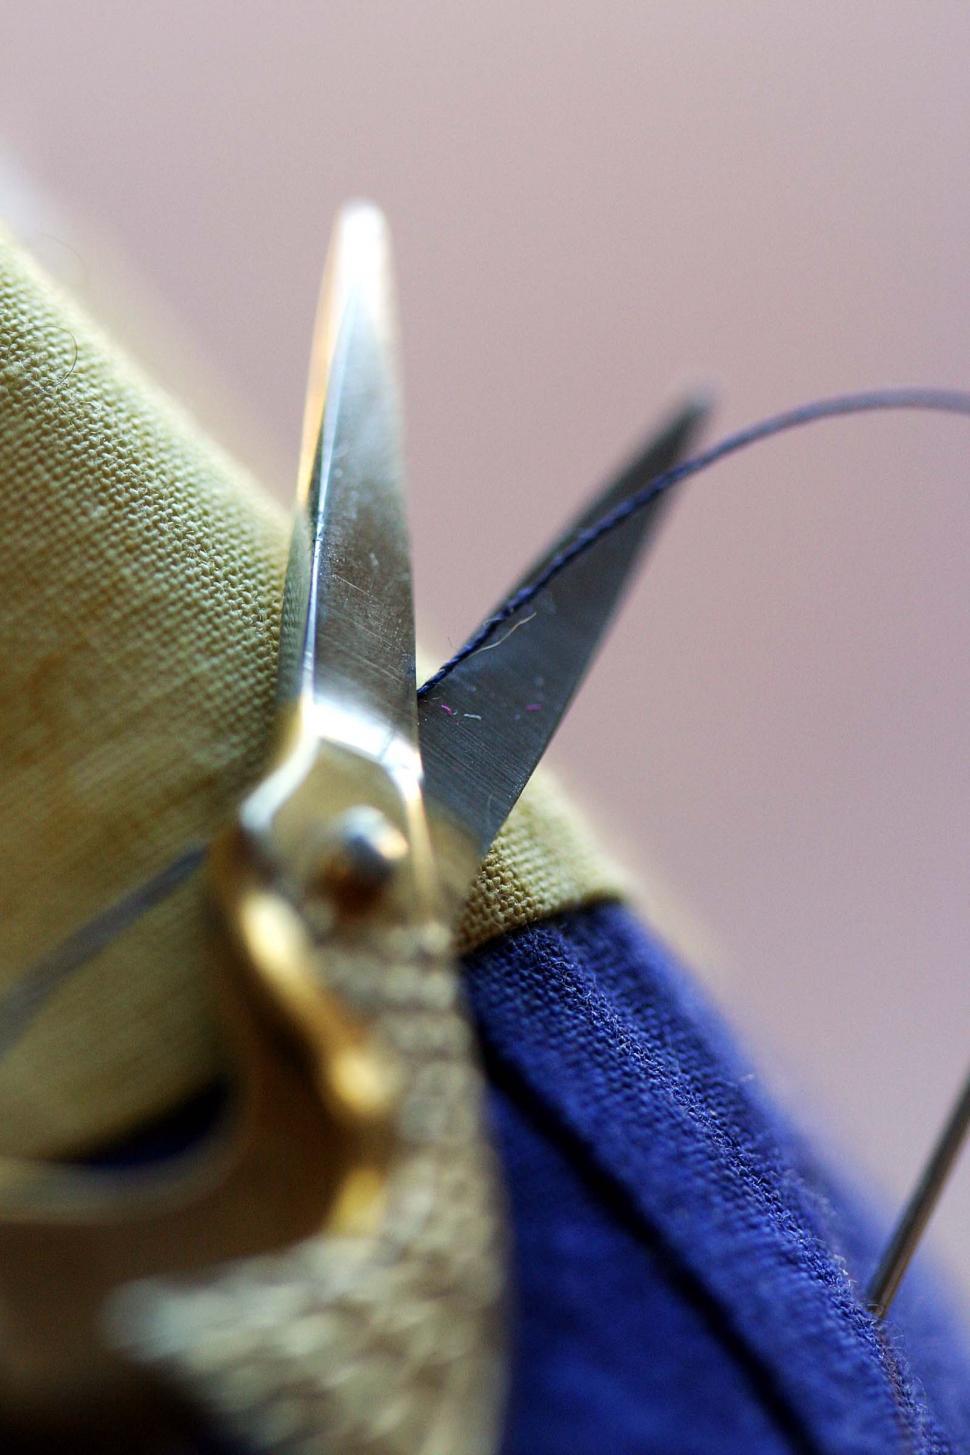 Free Image of sewing needles threads fabric stitching quilting scissors blades cut snip trim crane 